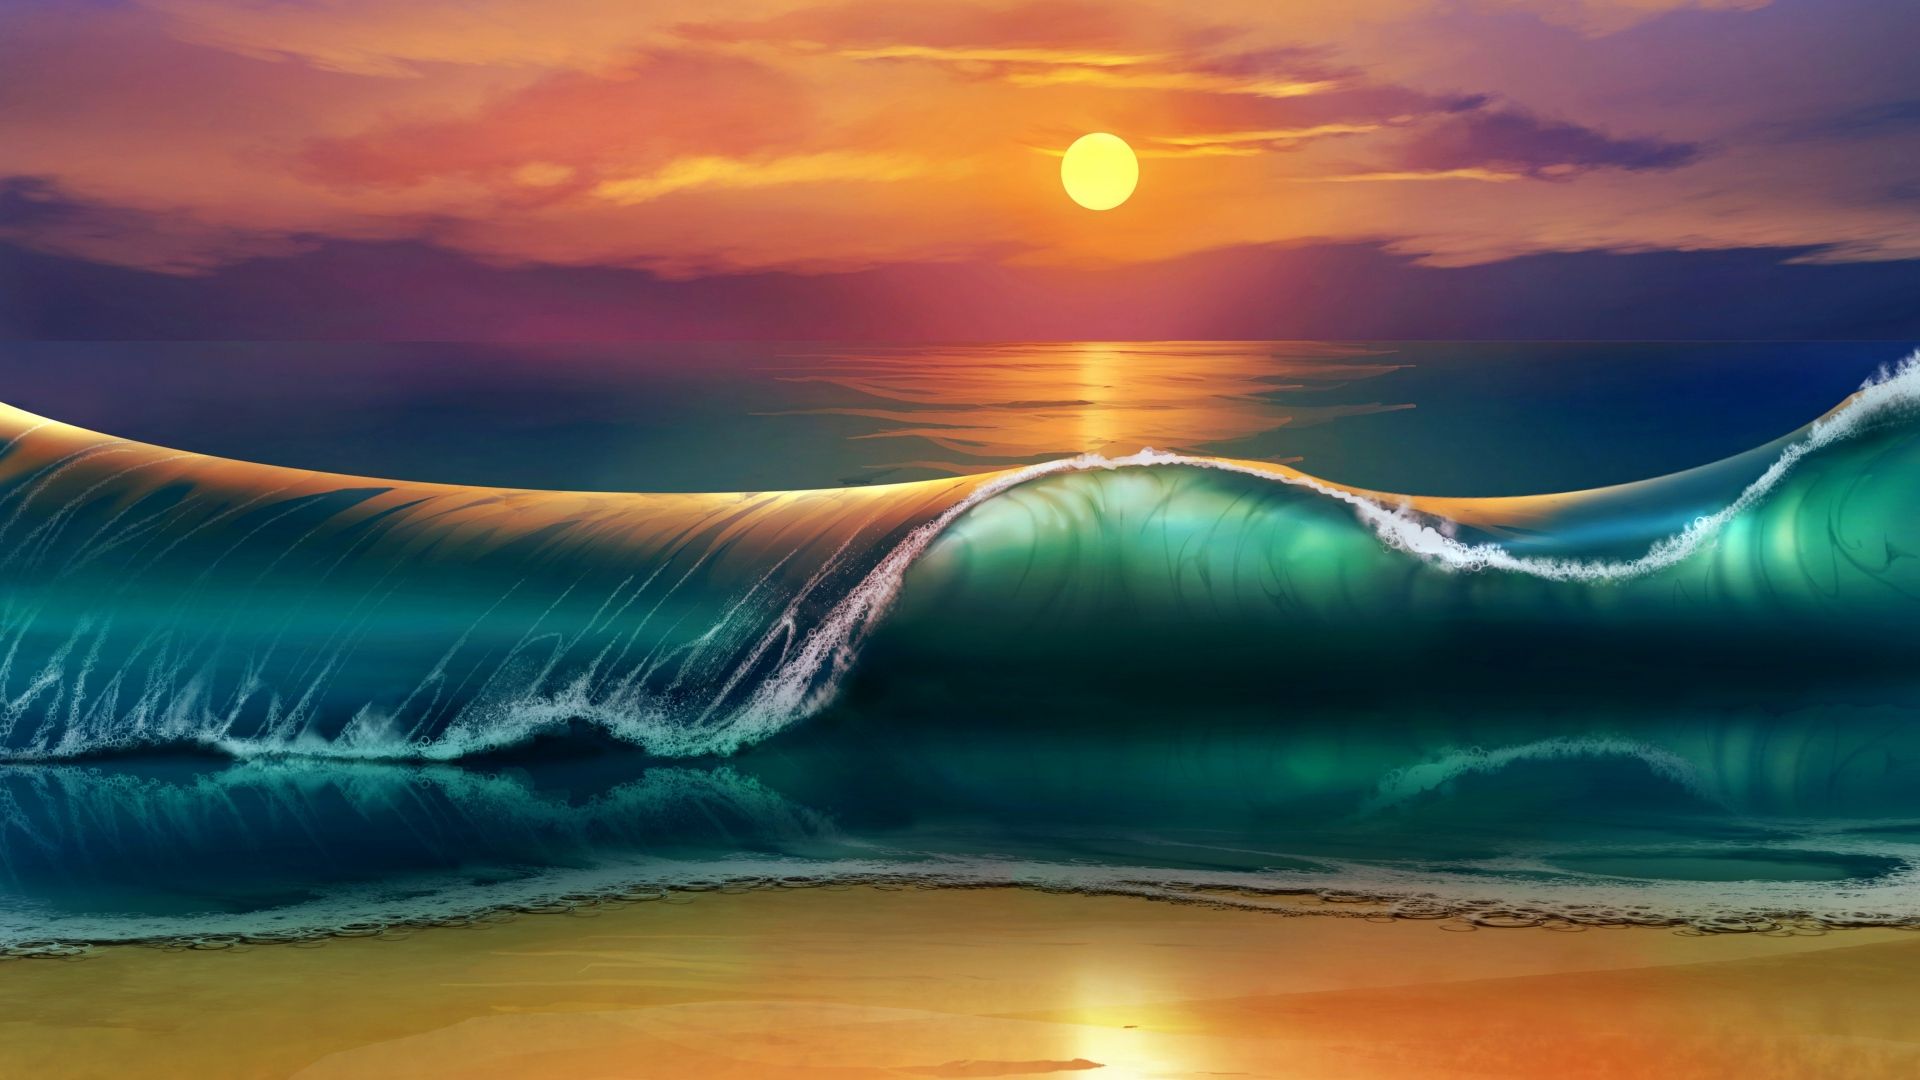 Download 1920x1080 HD Wallpaper giant wave sunset romantic beach drawn picture, Desktop Background HD